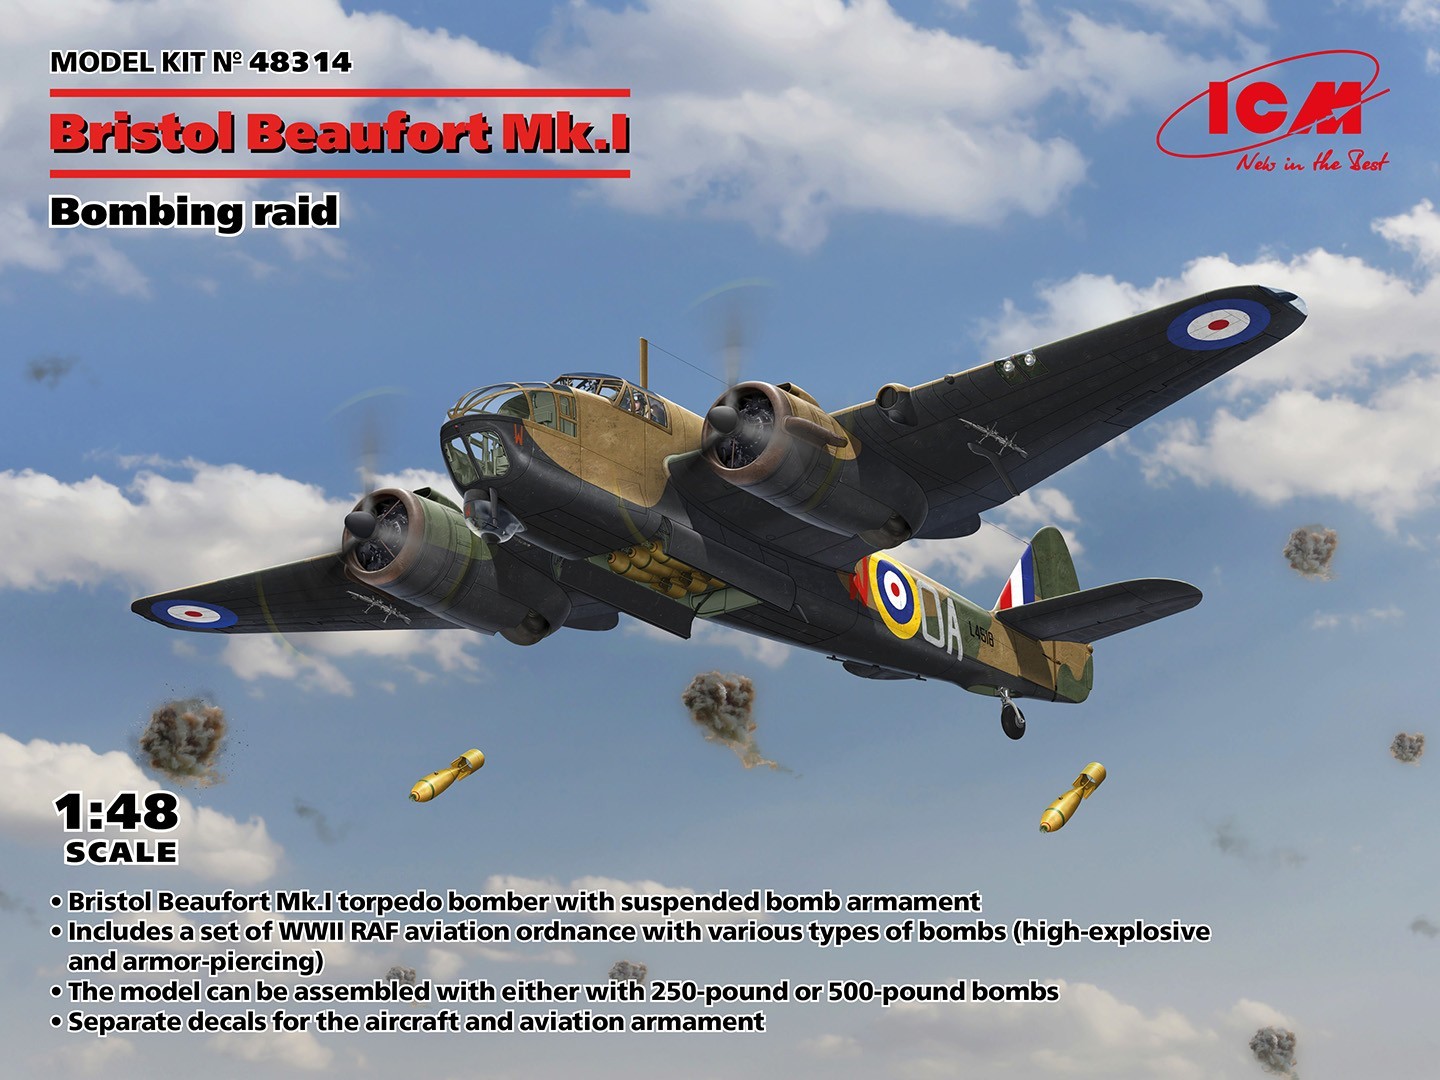 48314 - Bristol Beaufort Mk.I. Bombing Raid